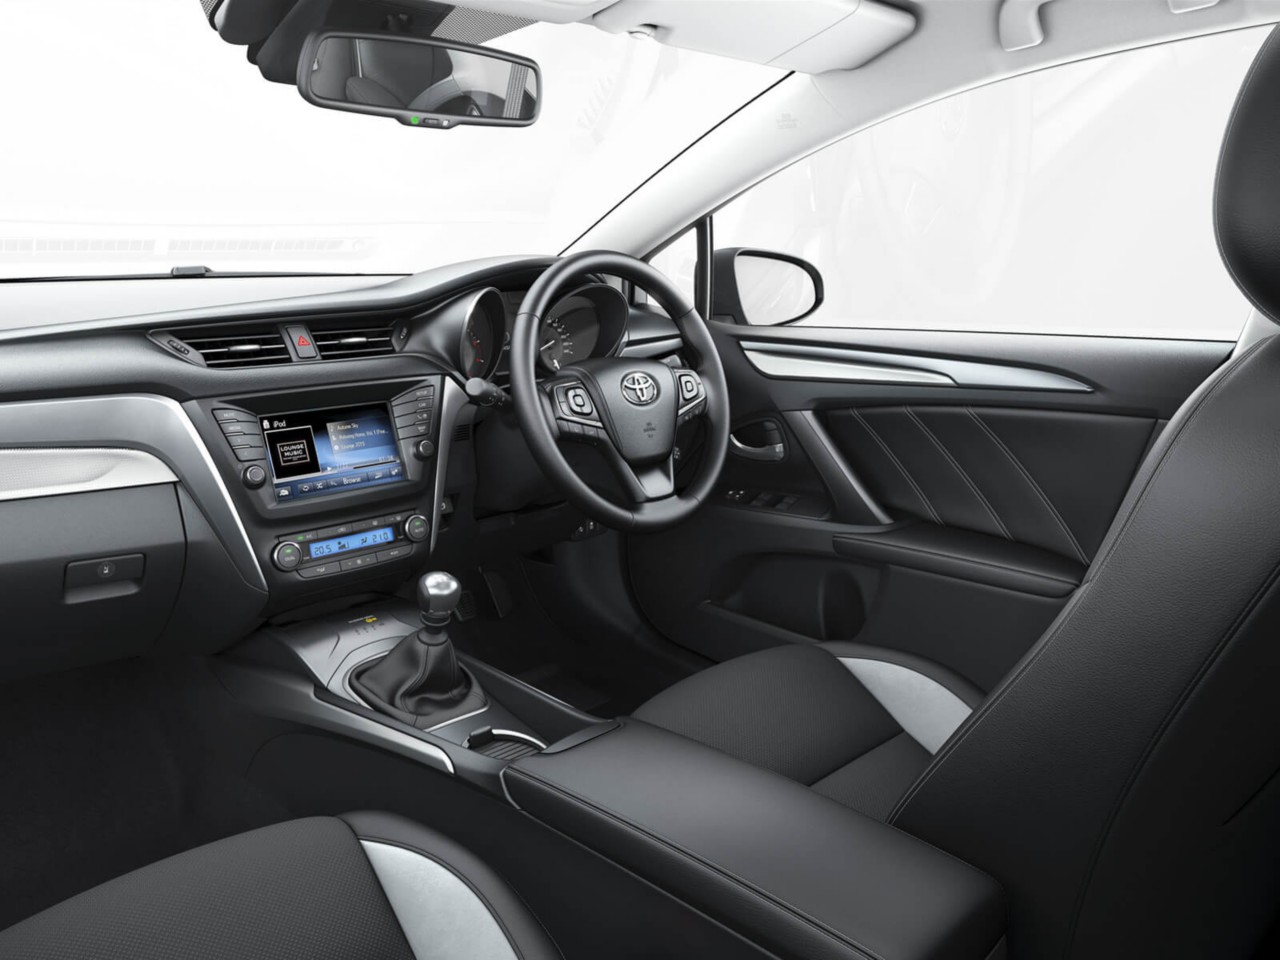 Toyota Avensis interior